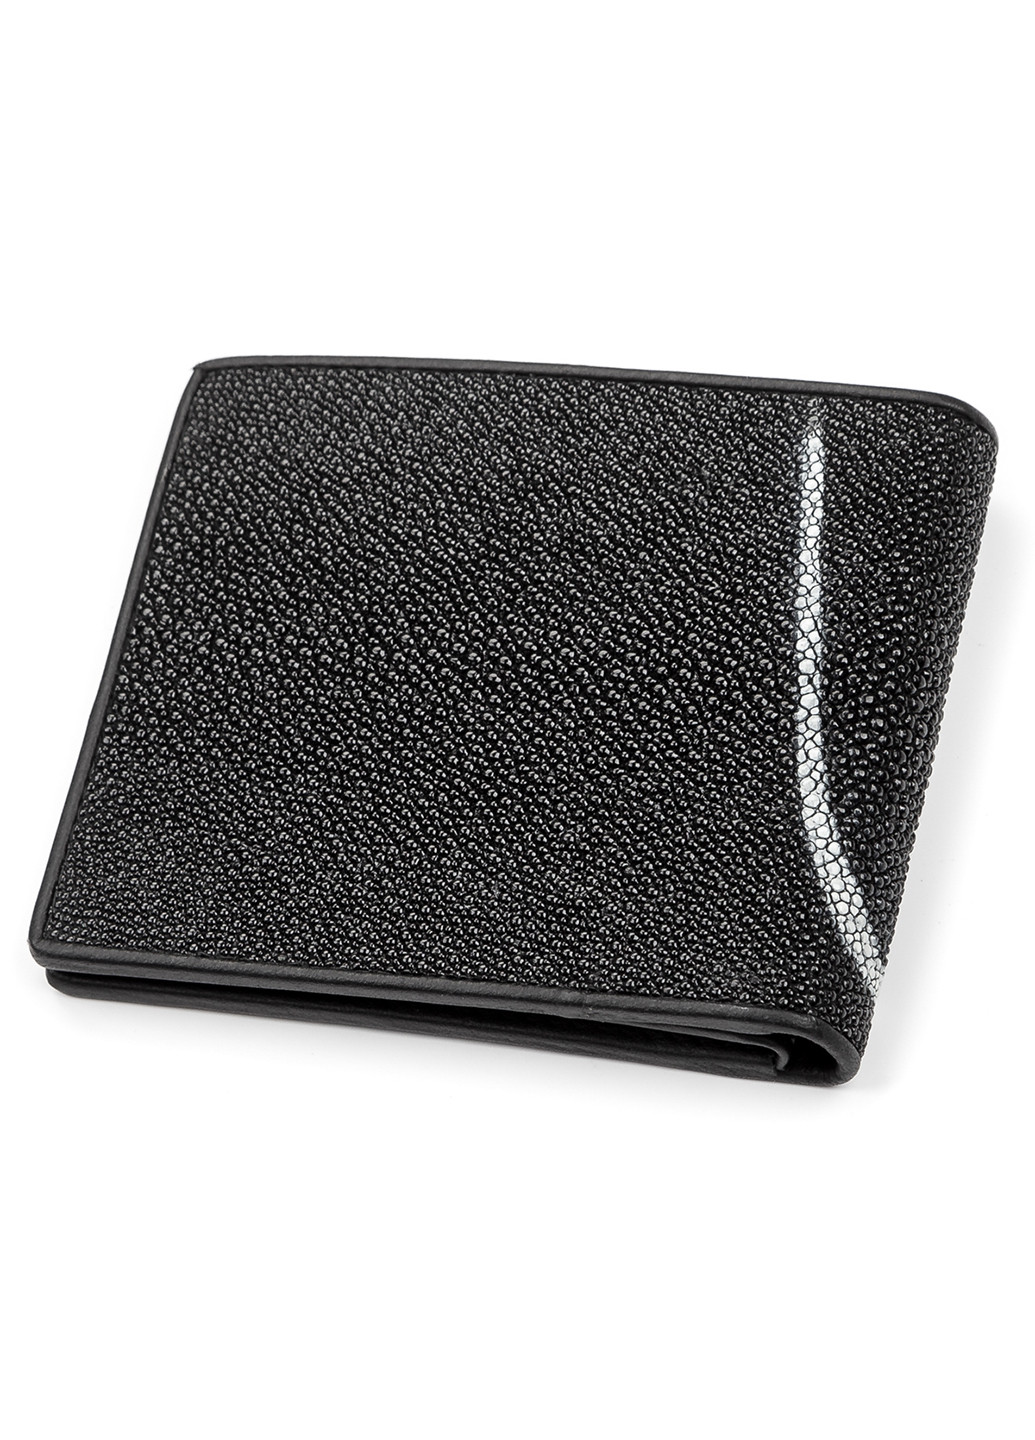 Мужское кожаное портмоне 11х9 см Stingray Leather (252128169)